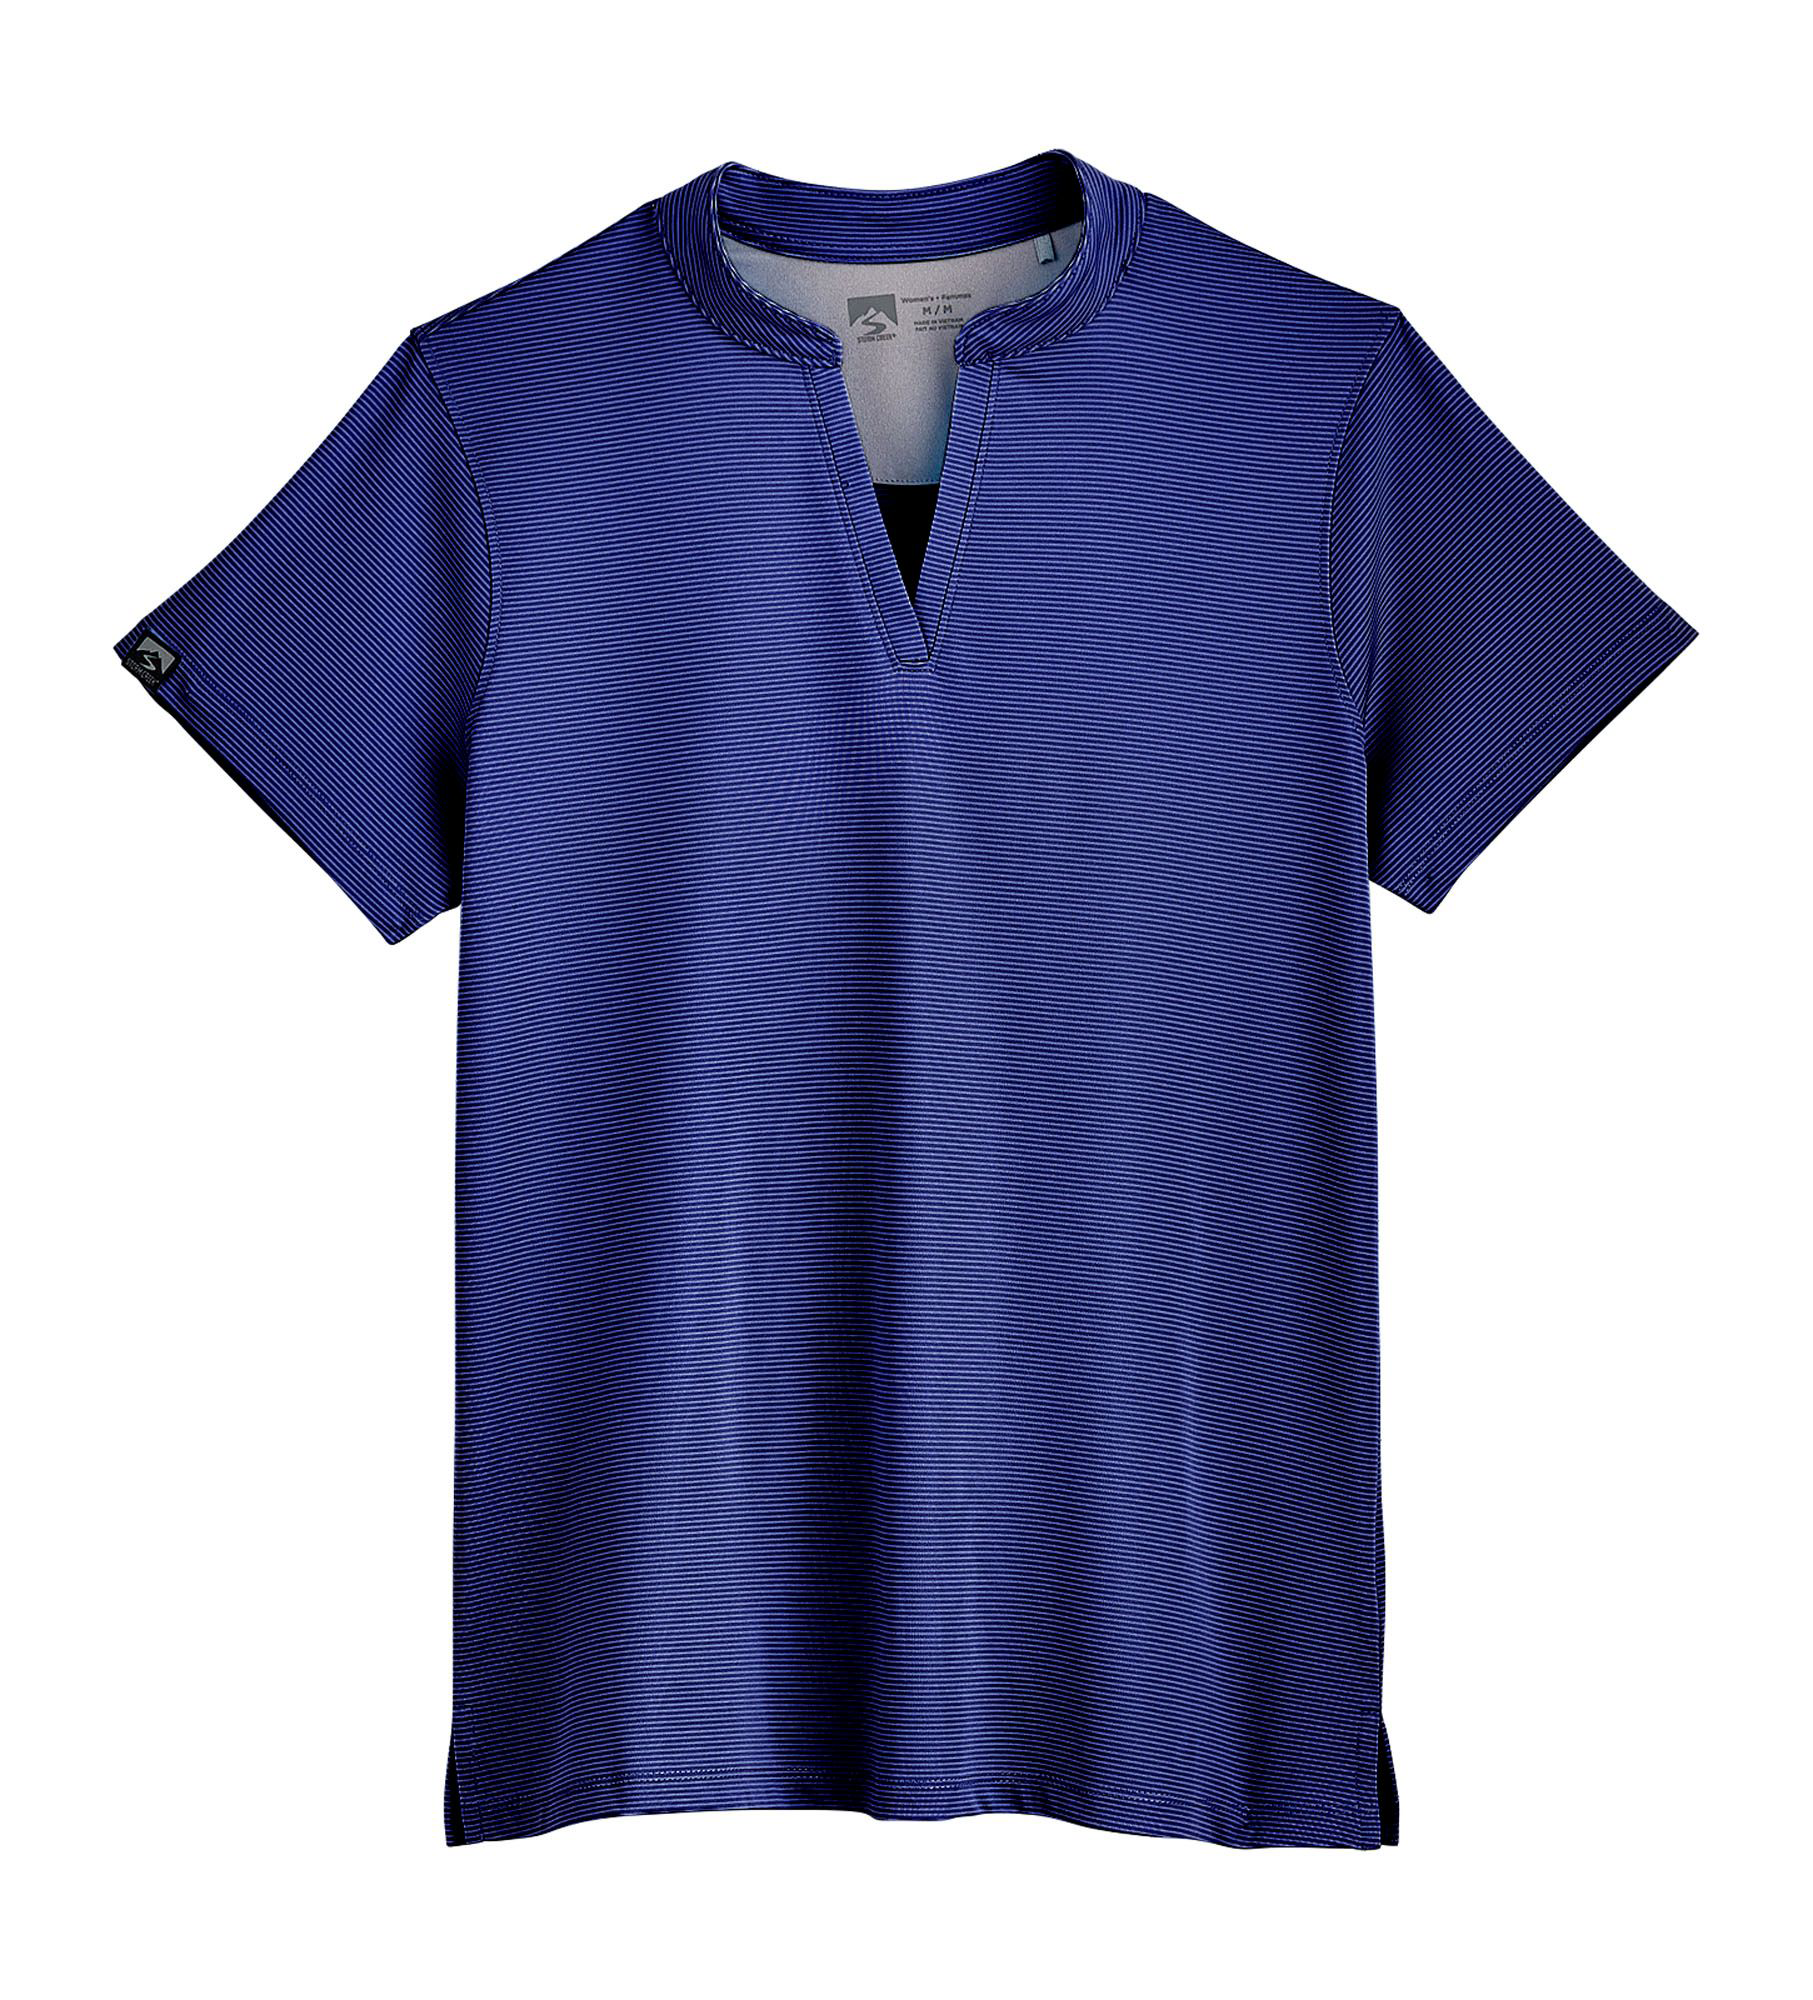 Storm Creek Optimist Short-Sleeve Polo Shirt for Ladies - Navy - 2XL